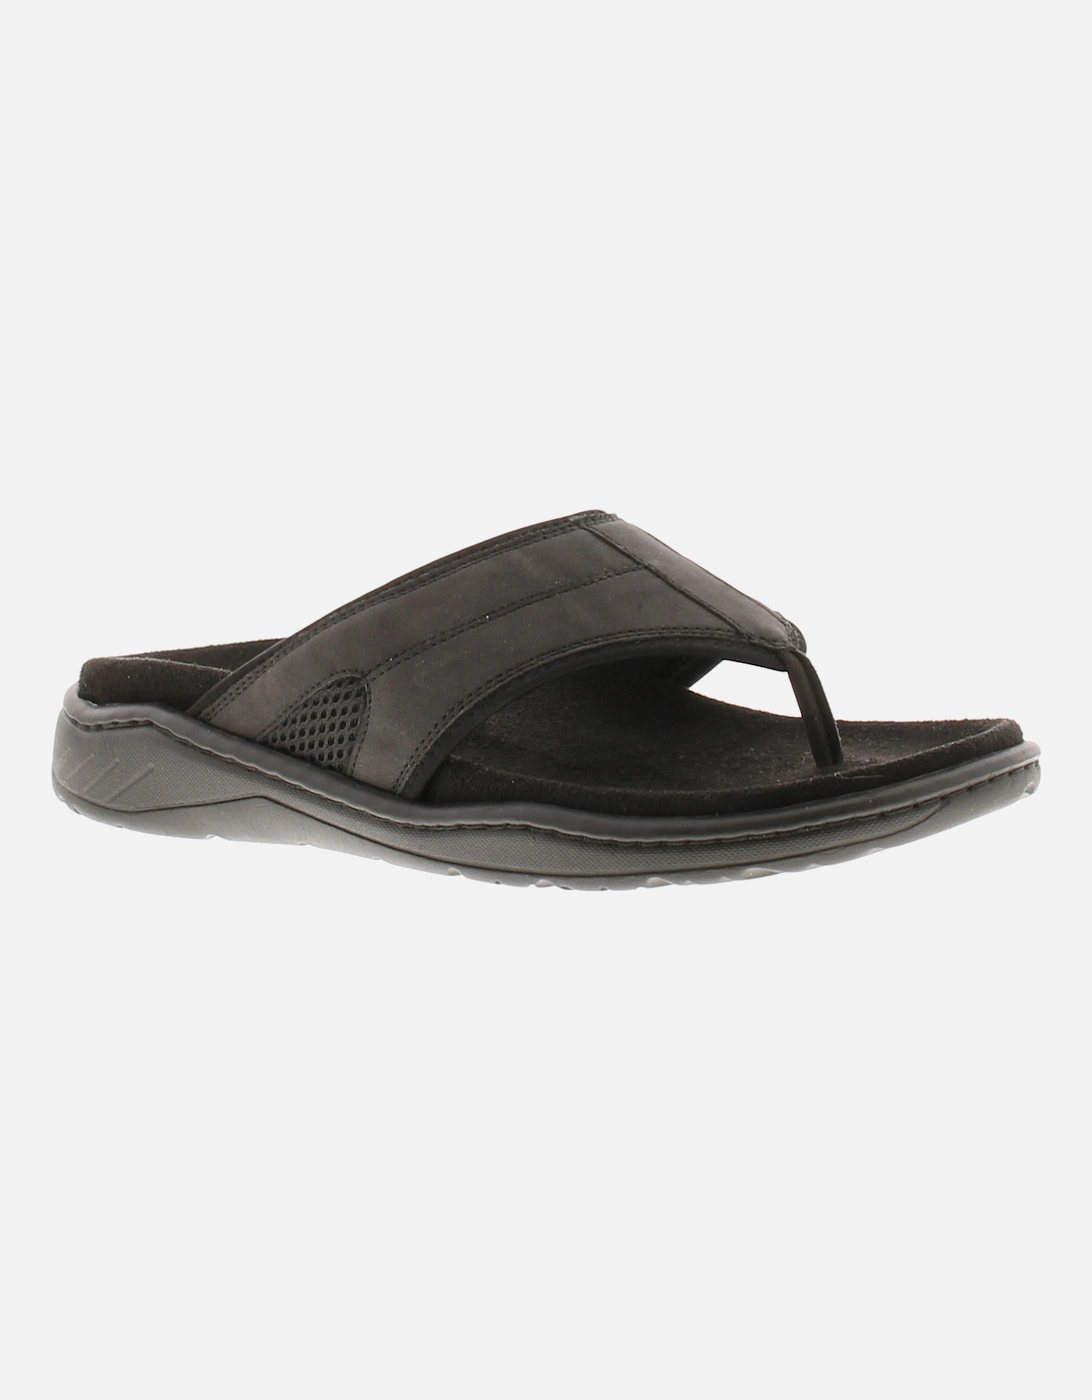 Mens Comfortable Sandals Toe Post Gerard Slip On black UK Size, 6 of 5